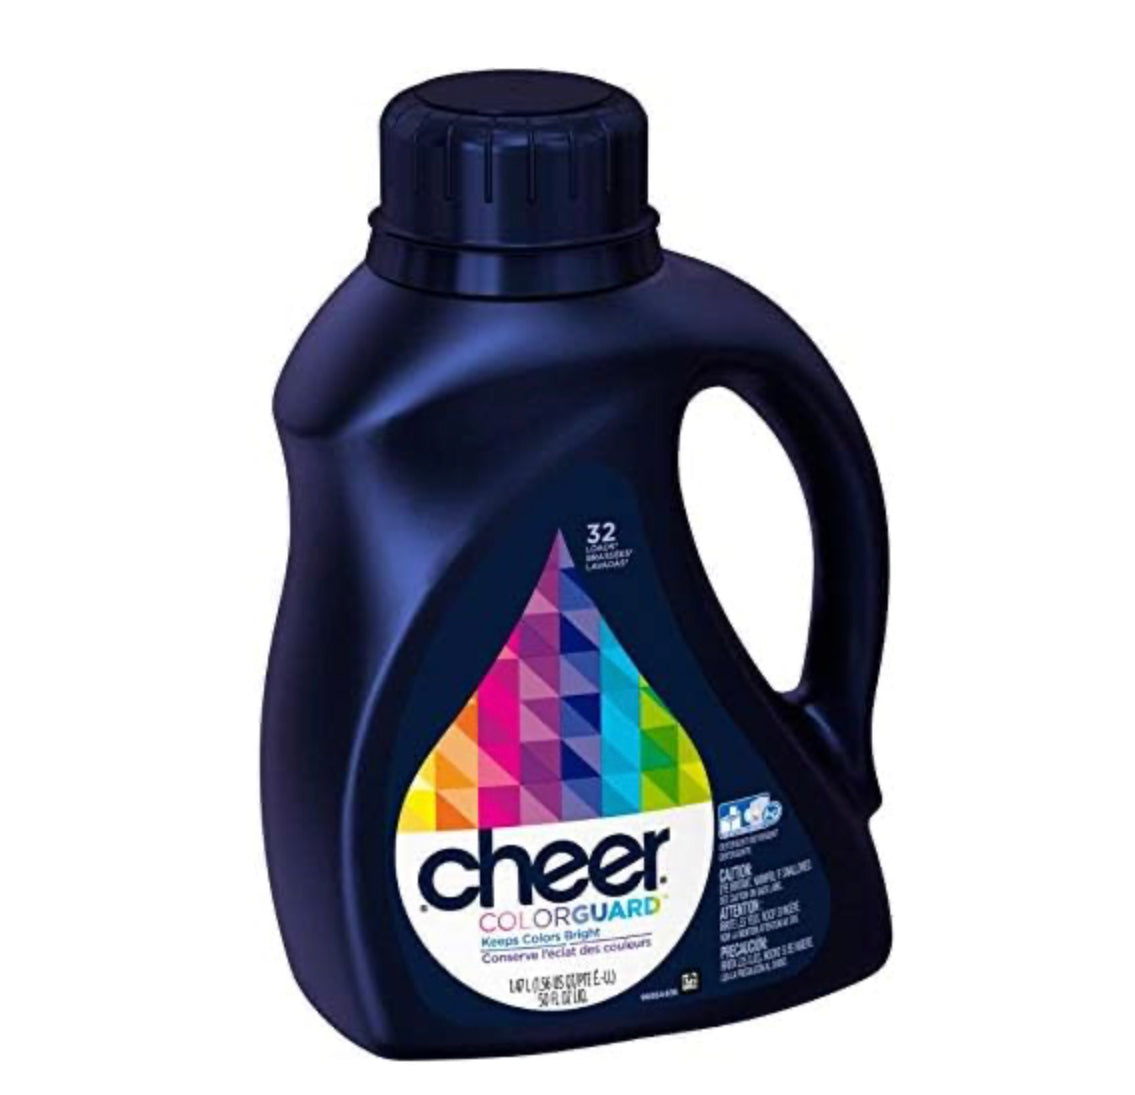 Cheer Color Guard Detergent 46oz